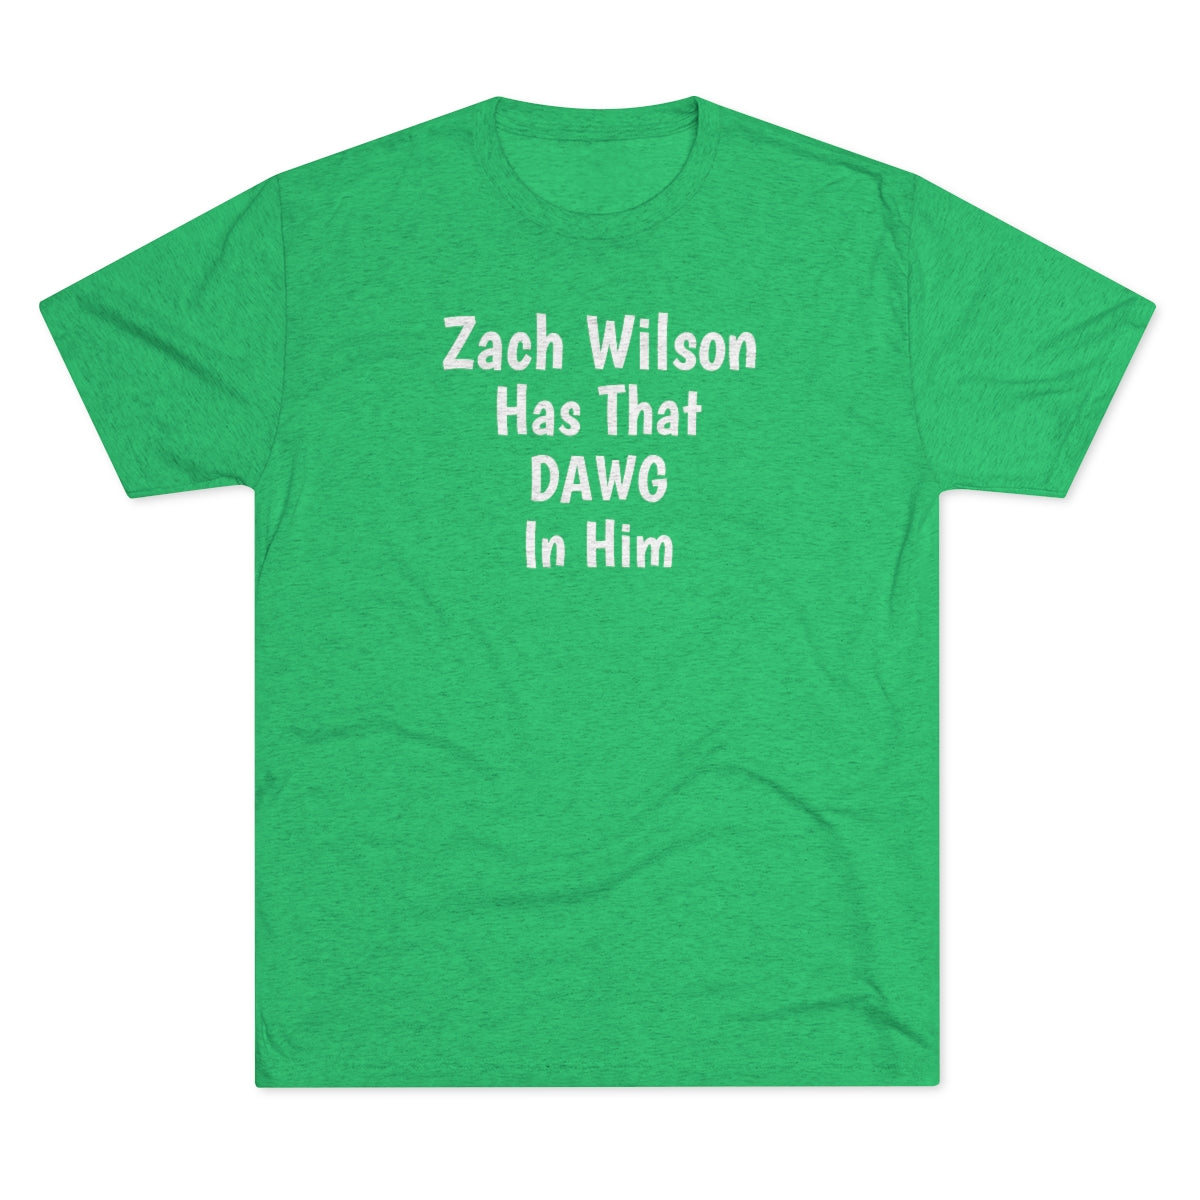 Zach Wilson Has That DAWG In Him Shirt - IsGoodBrand